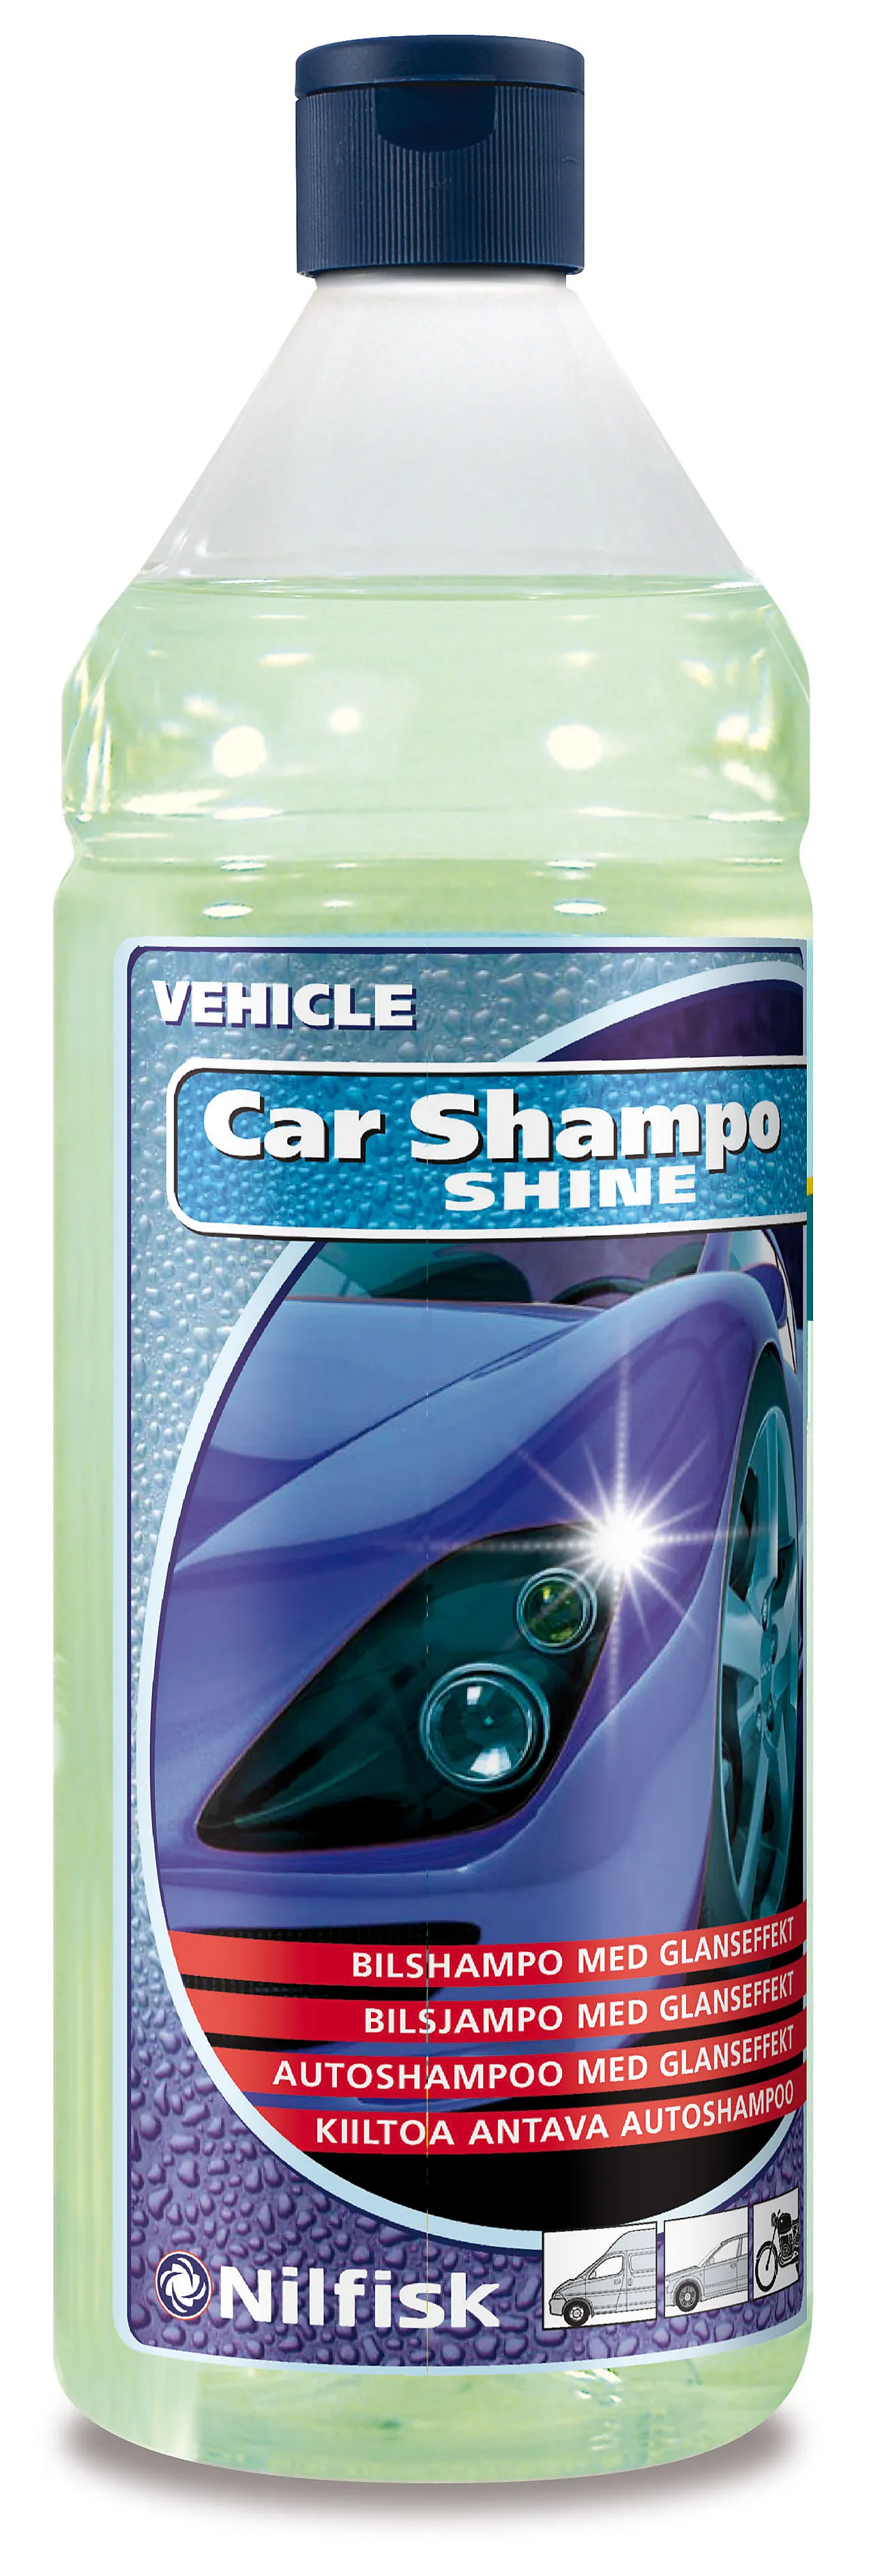 Bilvask Car Shampo Shine